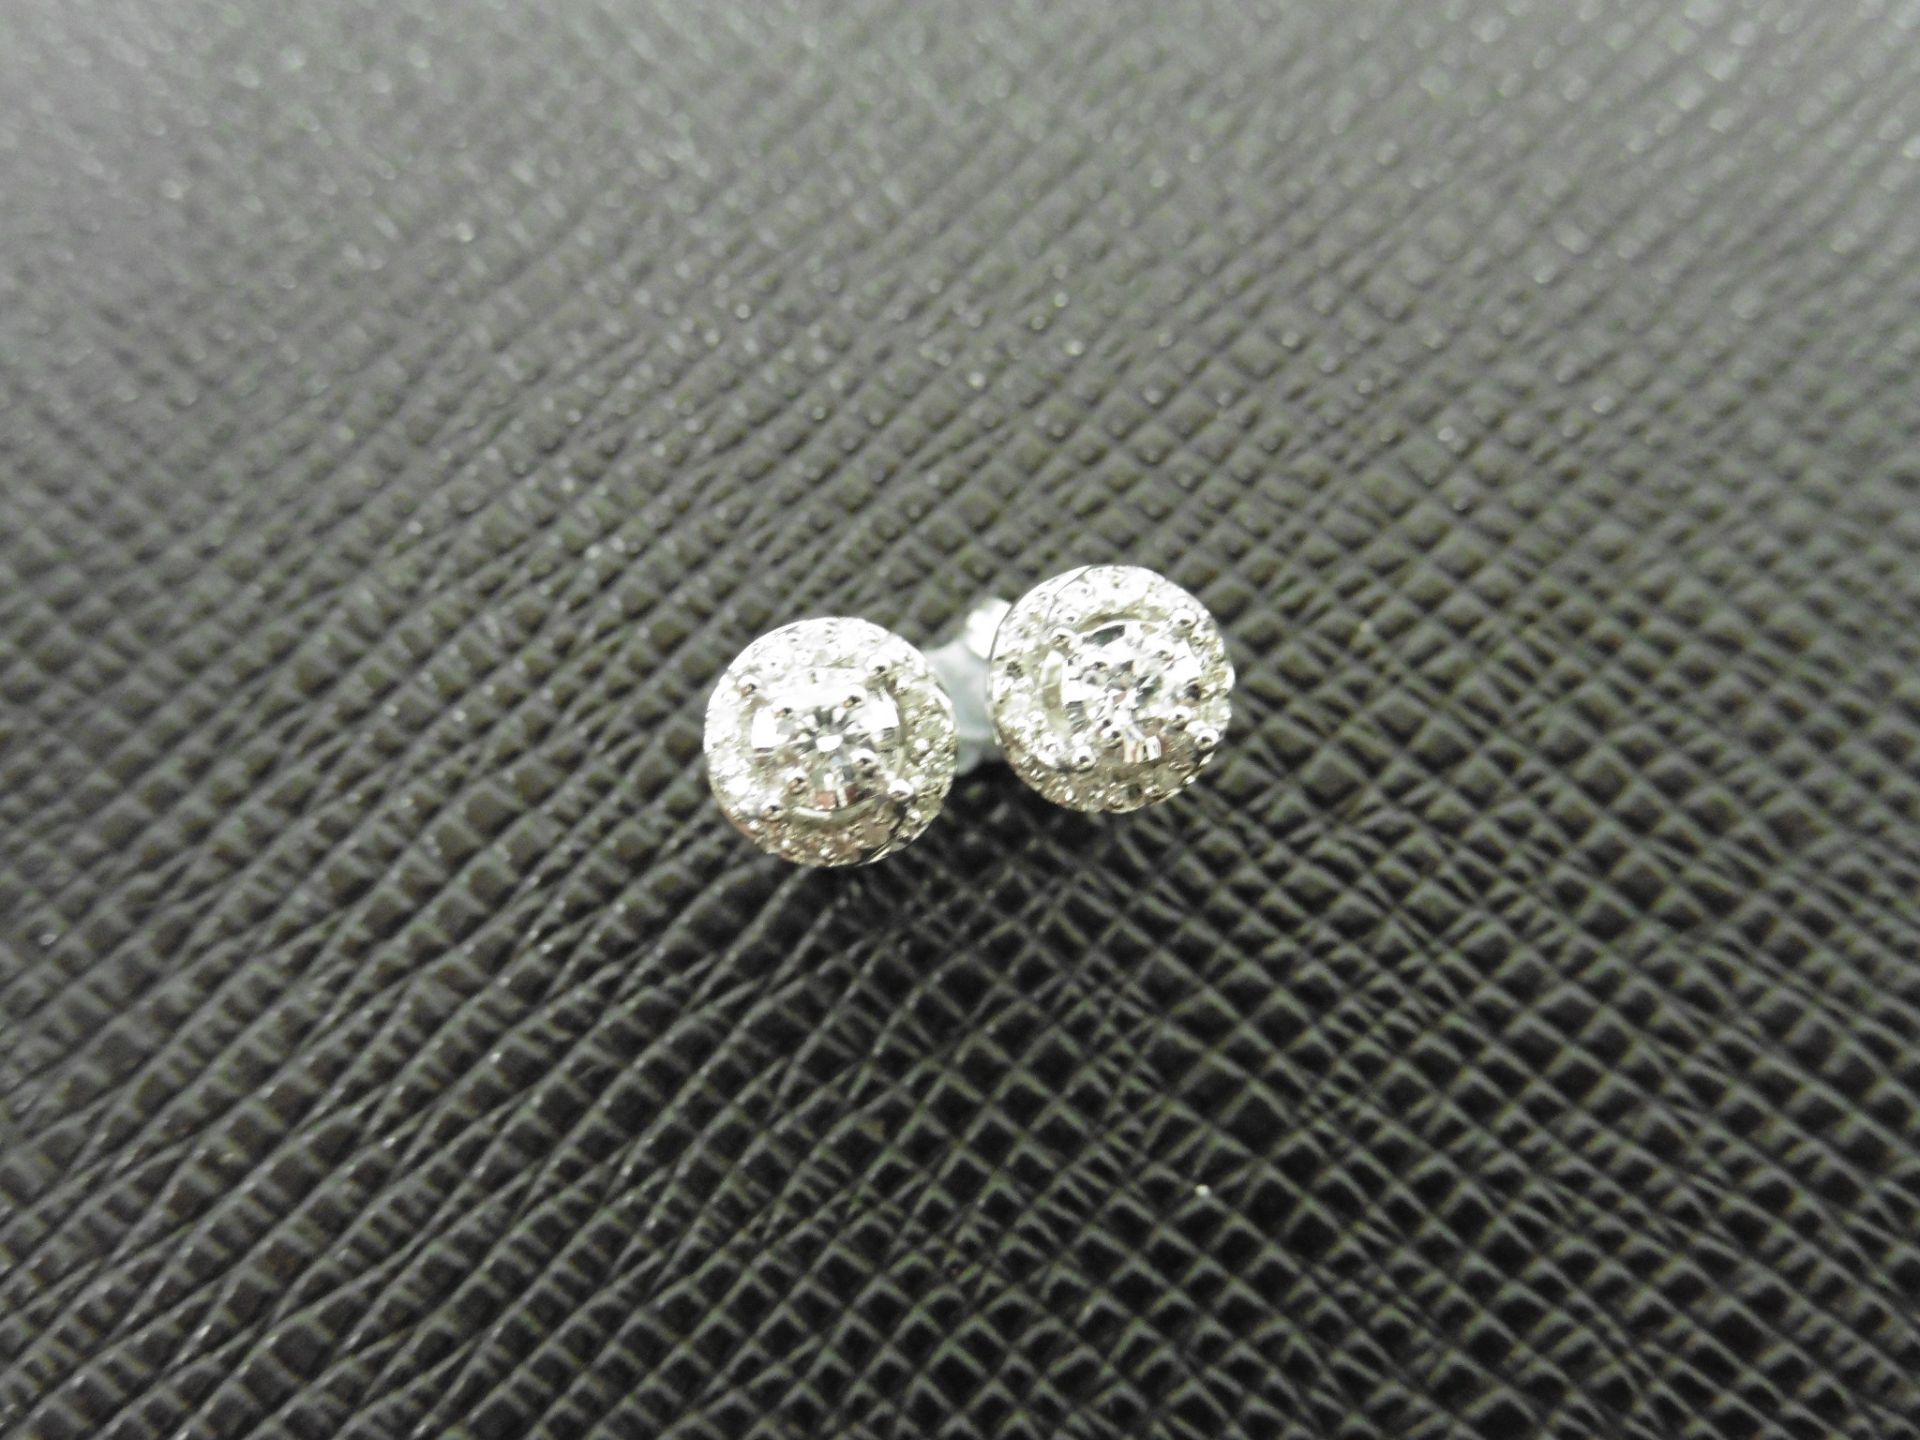 0.25ct diamond set stud earrings in 9ct white gold. Small brilliant cut diamonds. H colour and I1- - Bild 2 aus 3